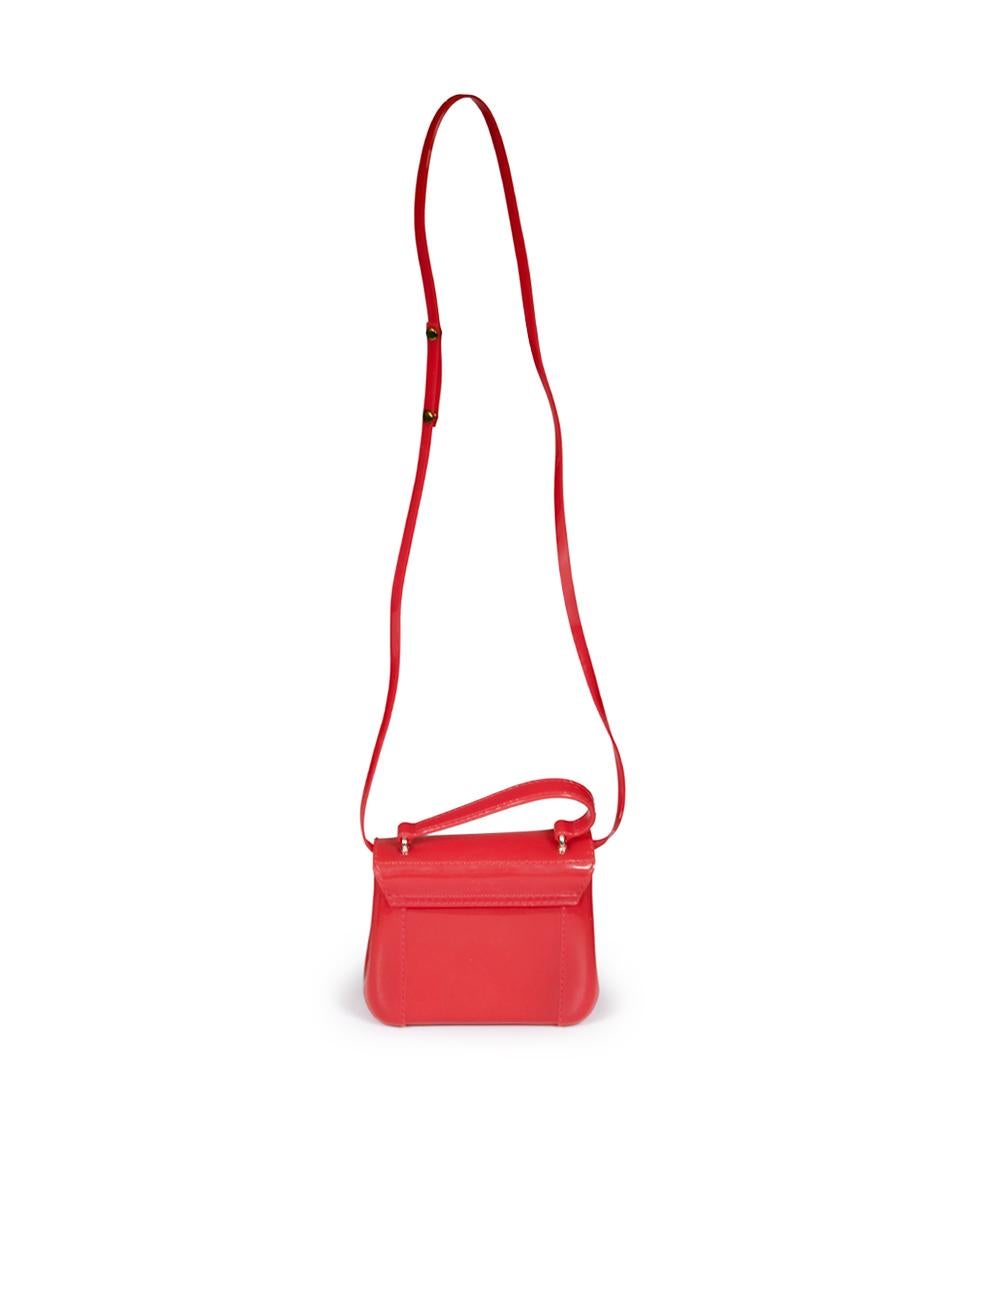 Furla Red Candy Bon Bon Mini Crossbody Bag In Good Condition For Sale In London, GB